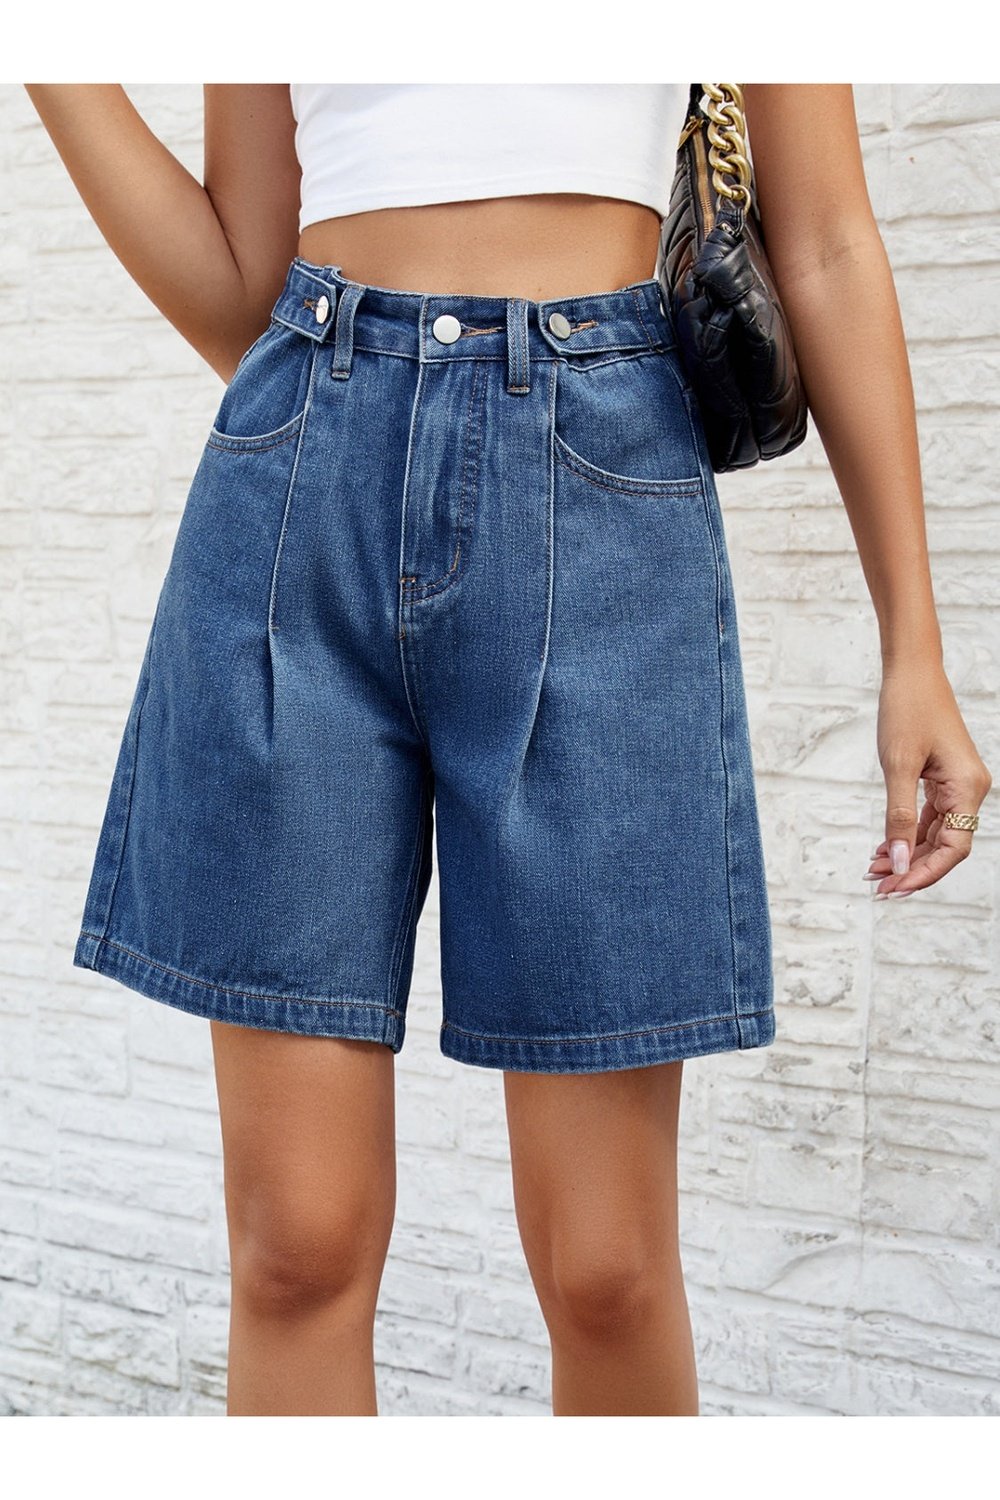 High Waist Denim Shorts with Pockets - Denim Shorts - FITGGINS